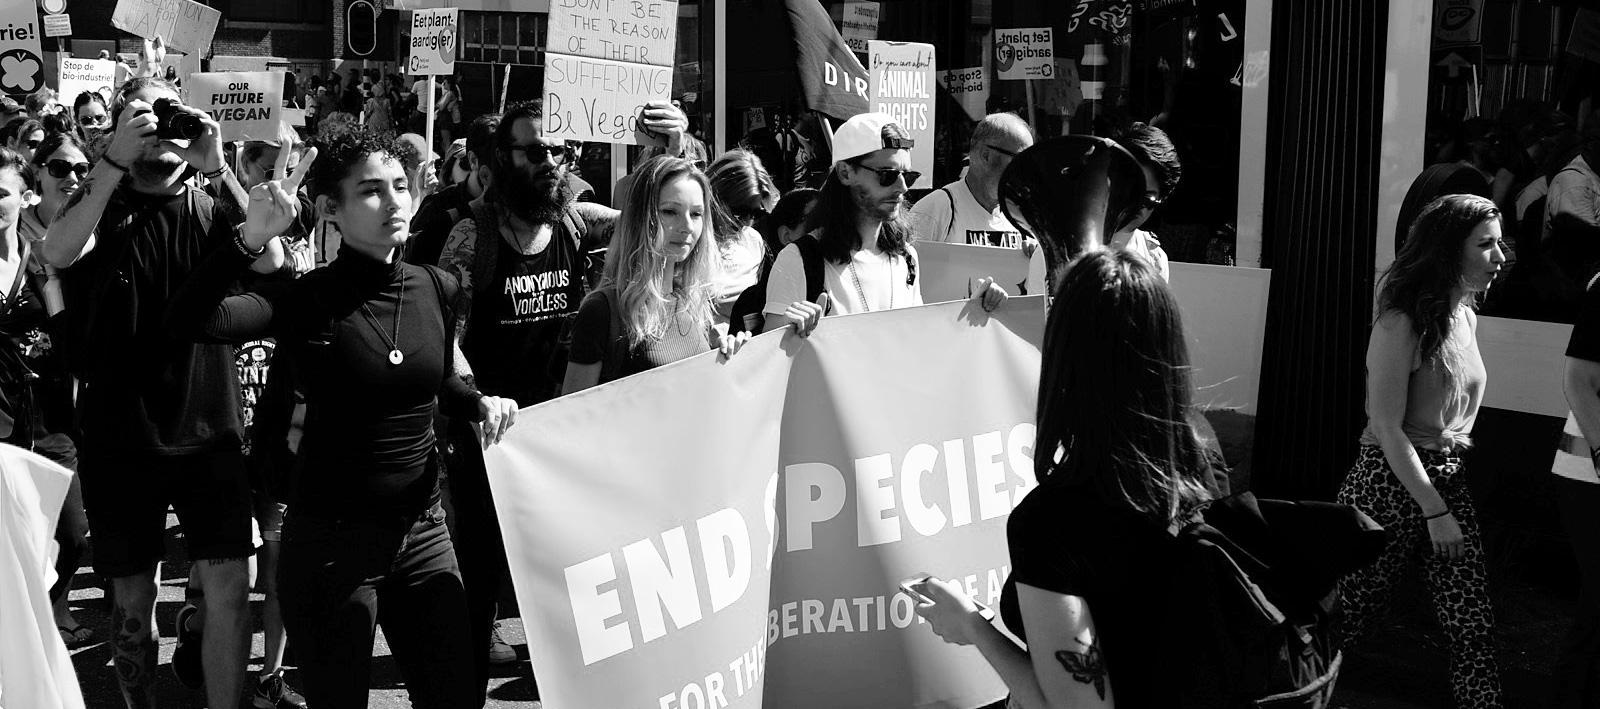 End speciesism march featuring Brenda de Groot holding a banner